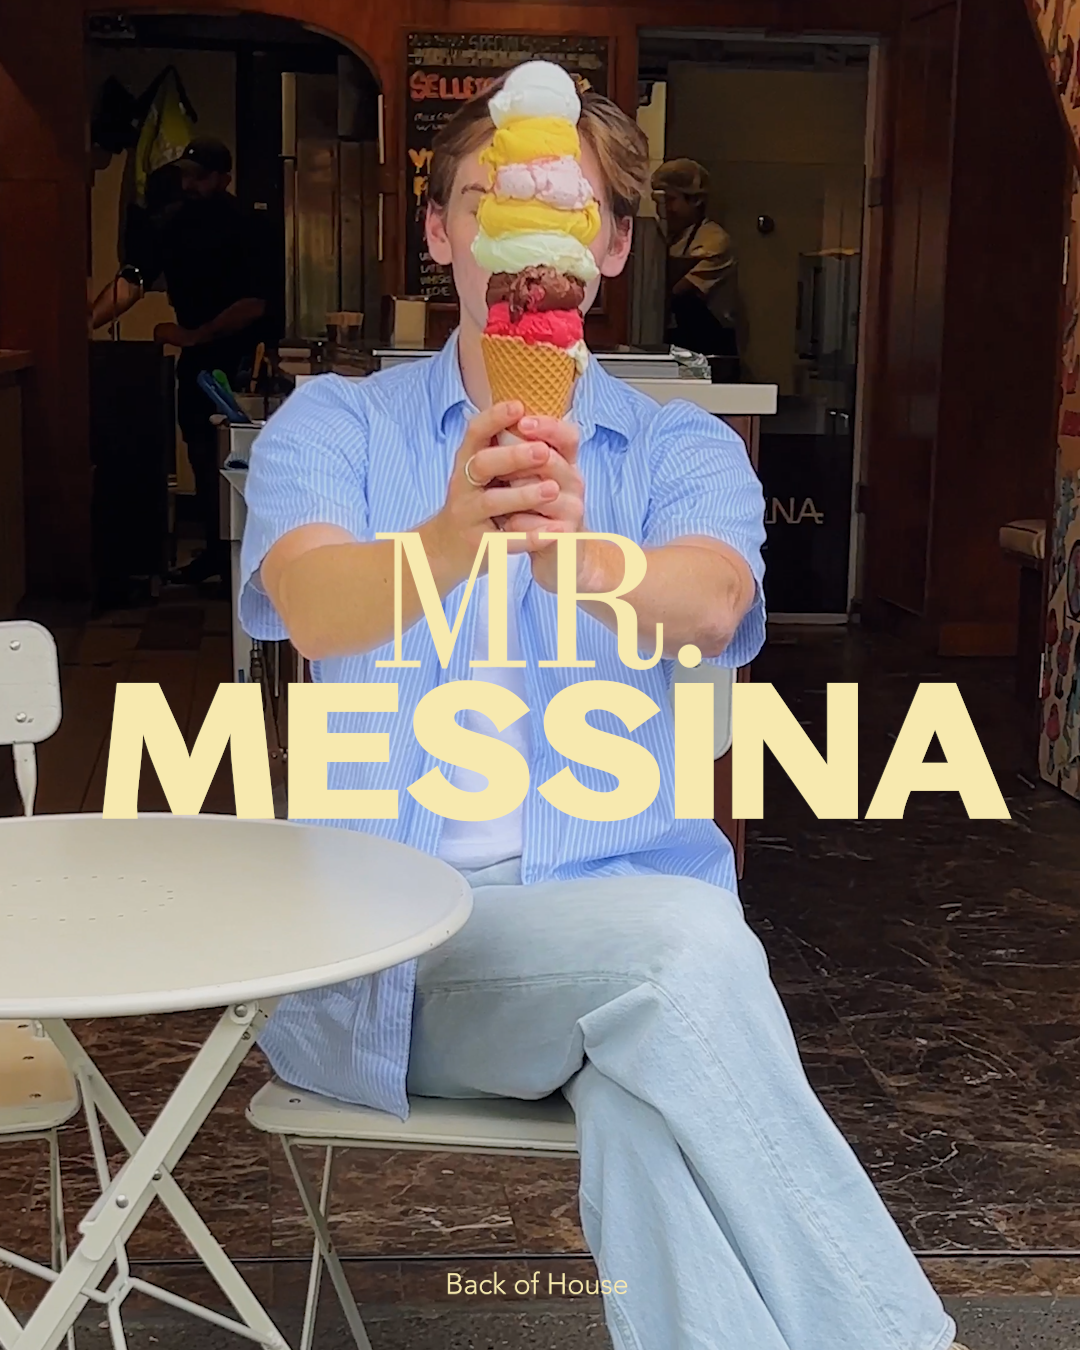 Gelato Messina social media manager interview